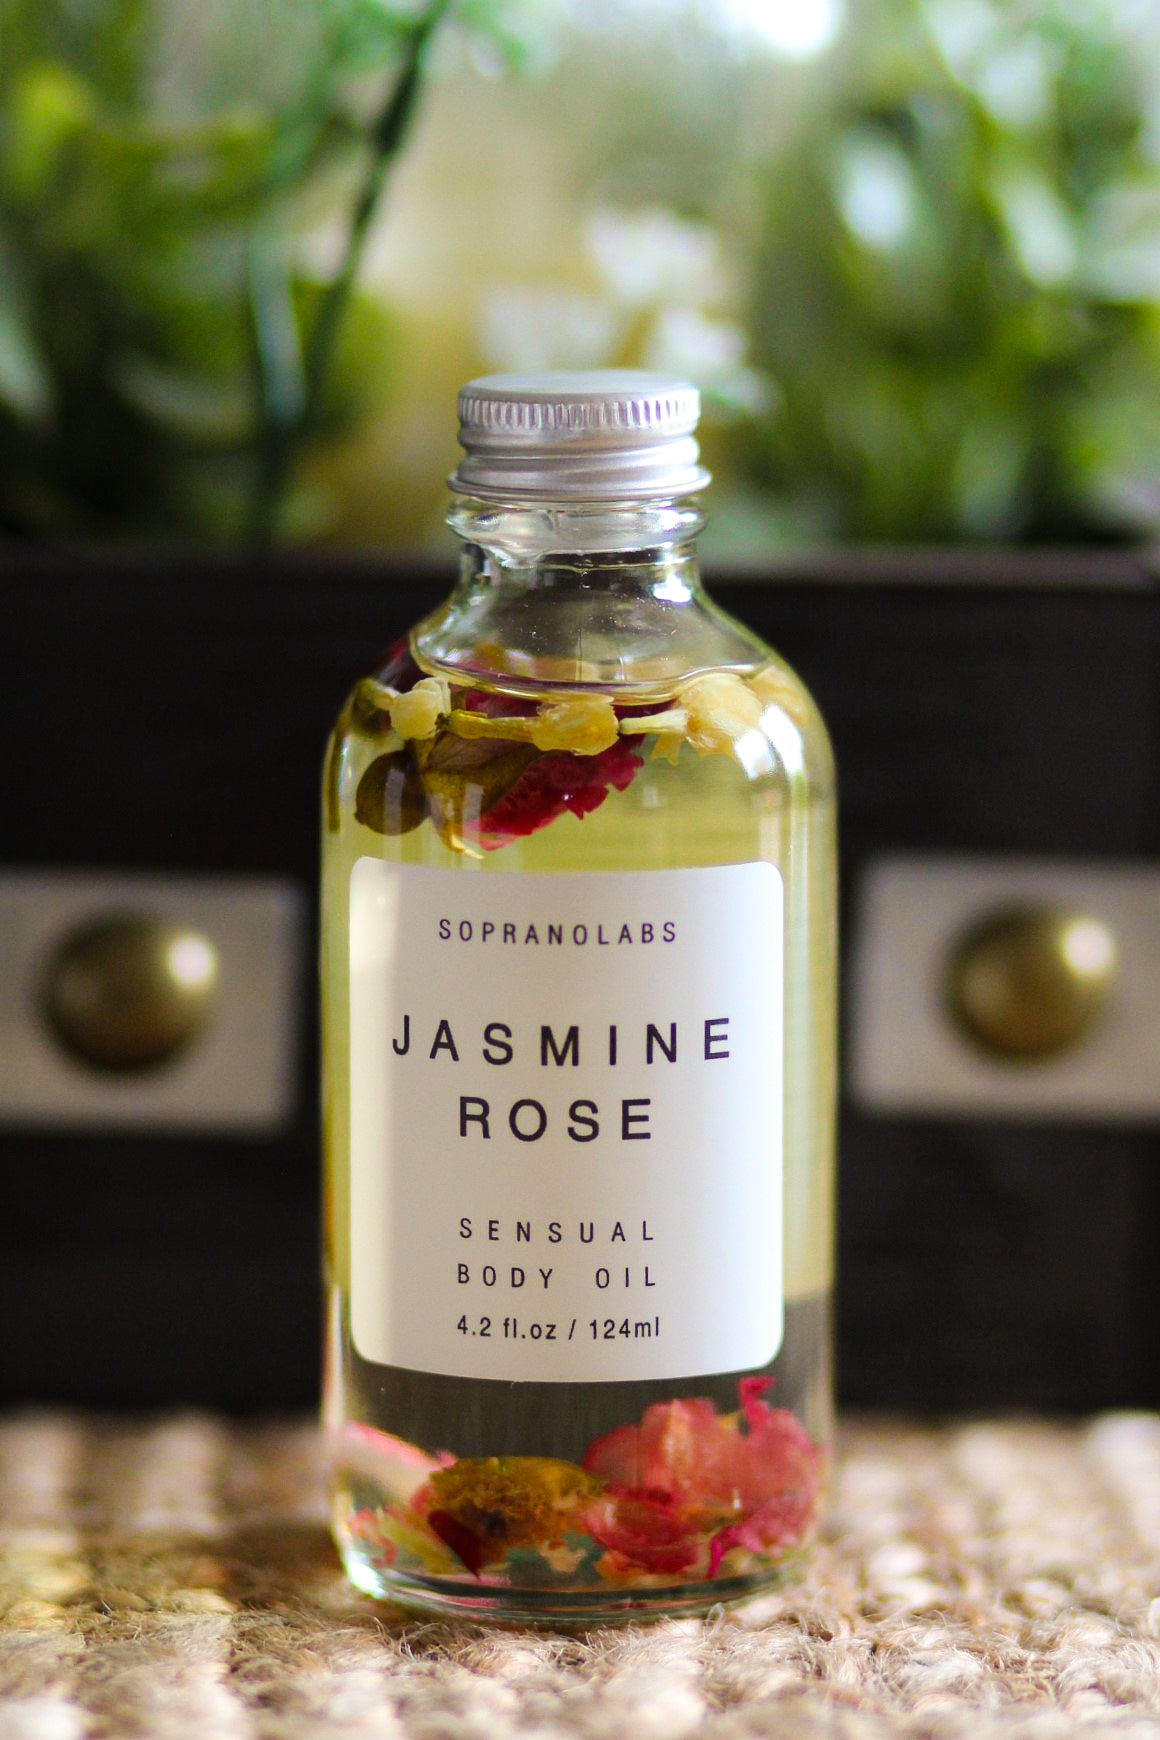 Jasmine & Rose Sensual Body Oil